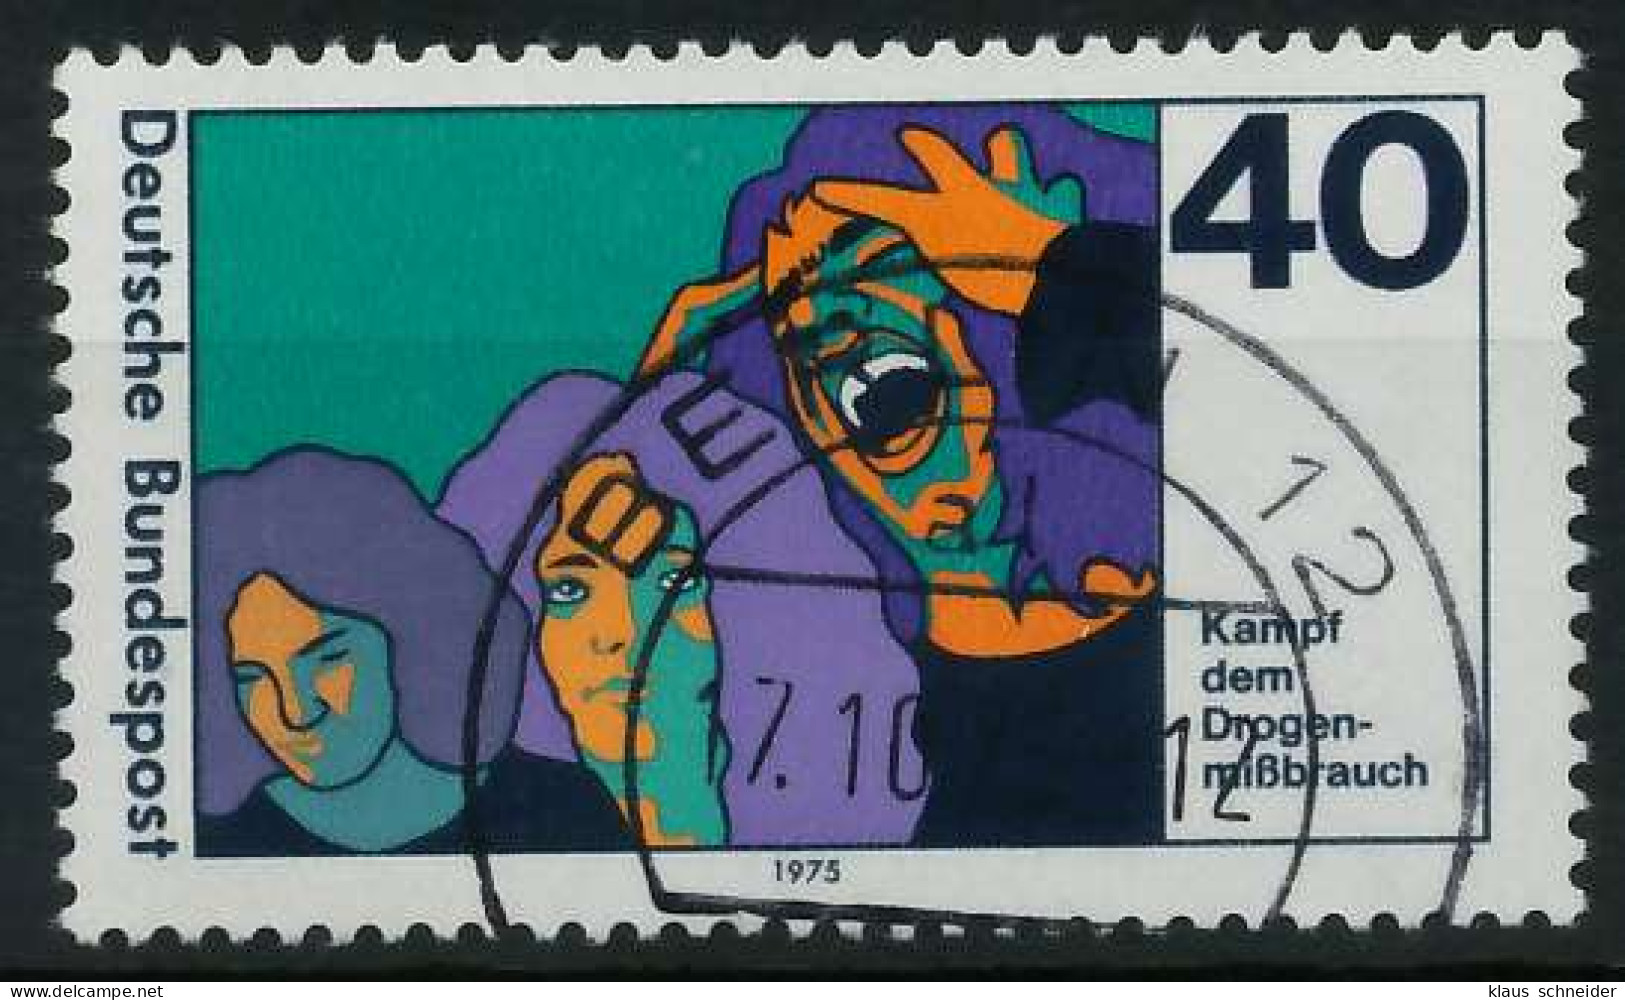 BRD 1975 Nr 864 Gestempelt X851226 - Used Stamps